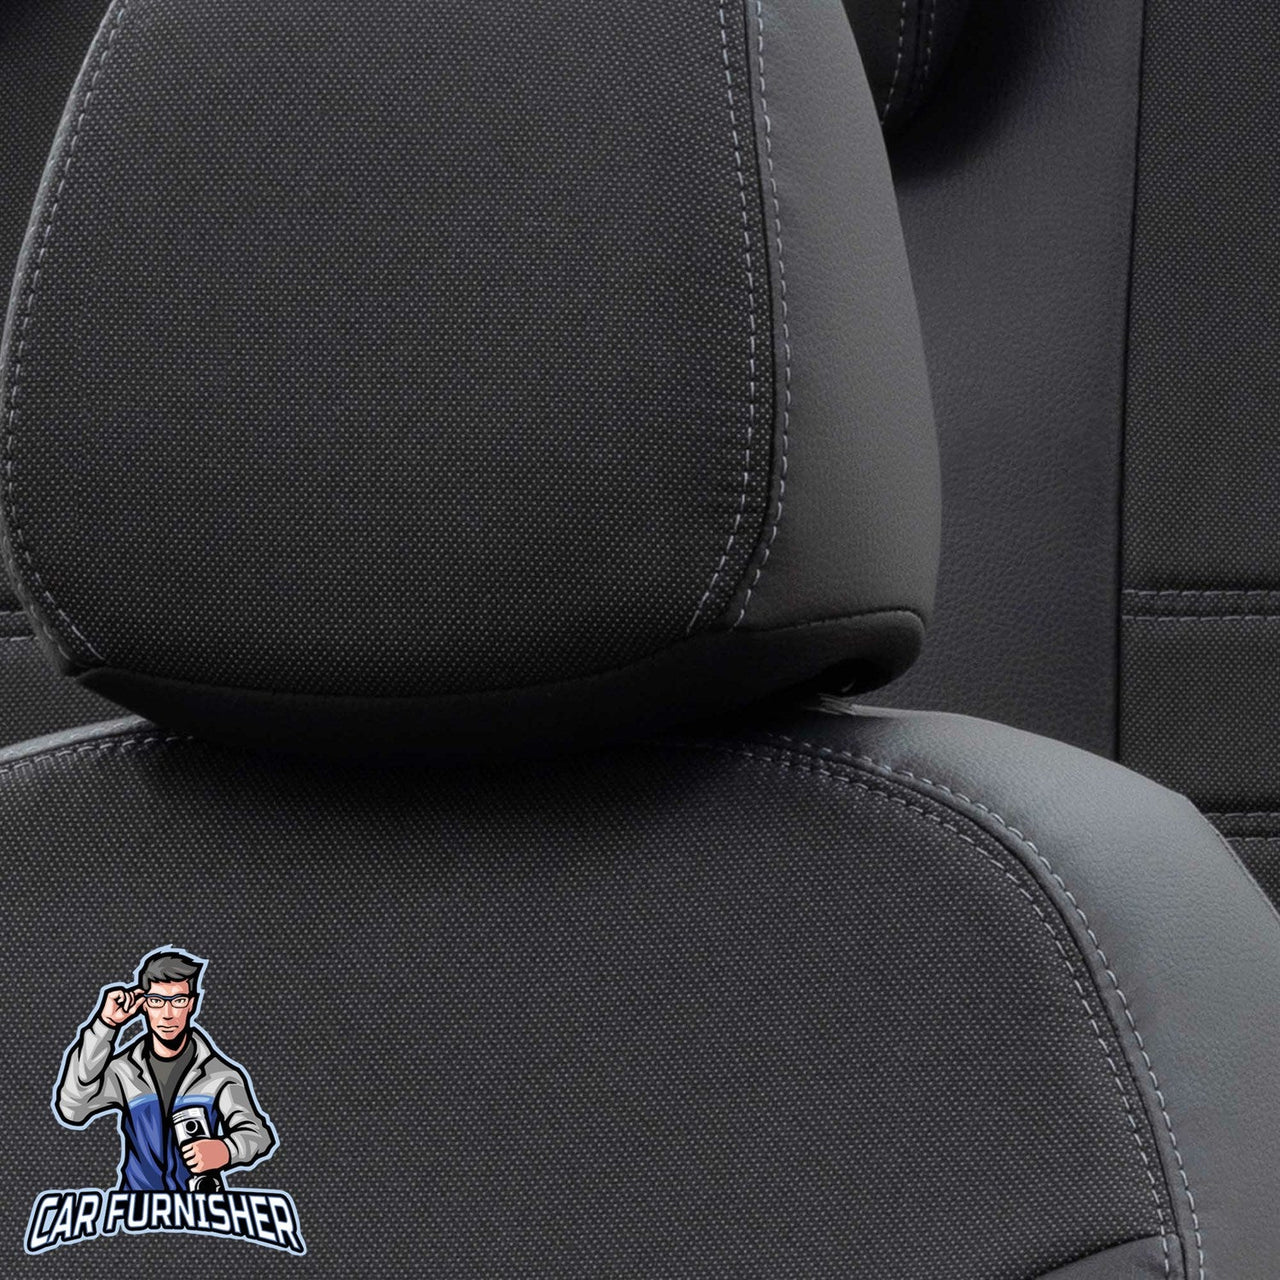 Mercedes Sprinter Seat Covers Paris Leather & Jacquard Design Black Leather & Jacquard Fabric